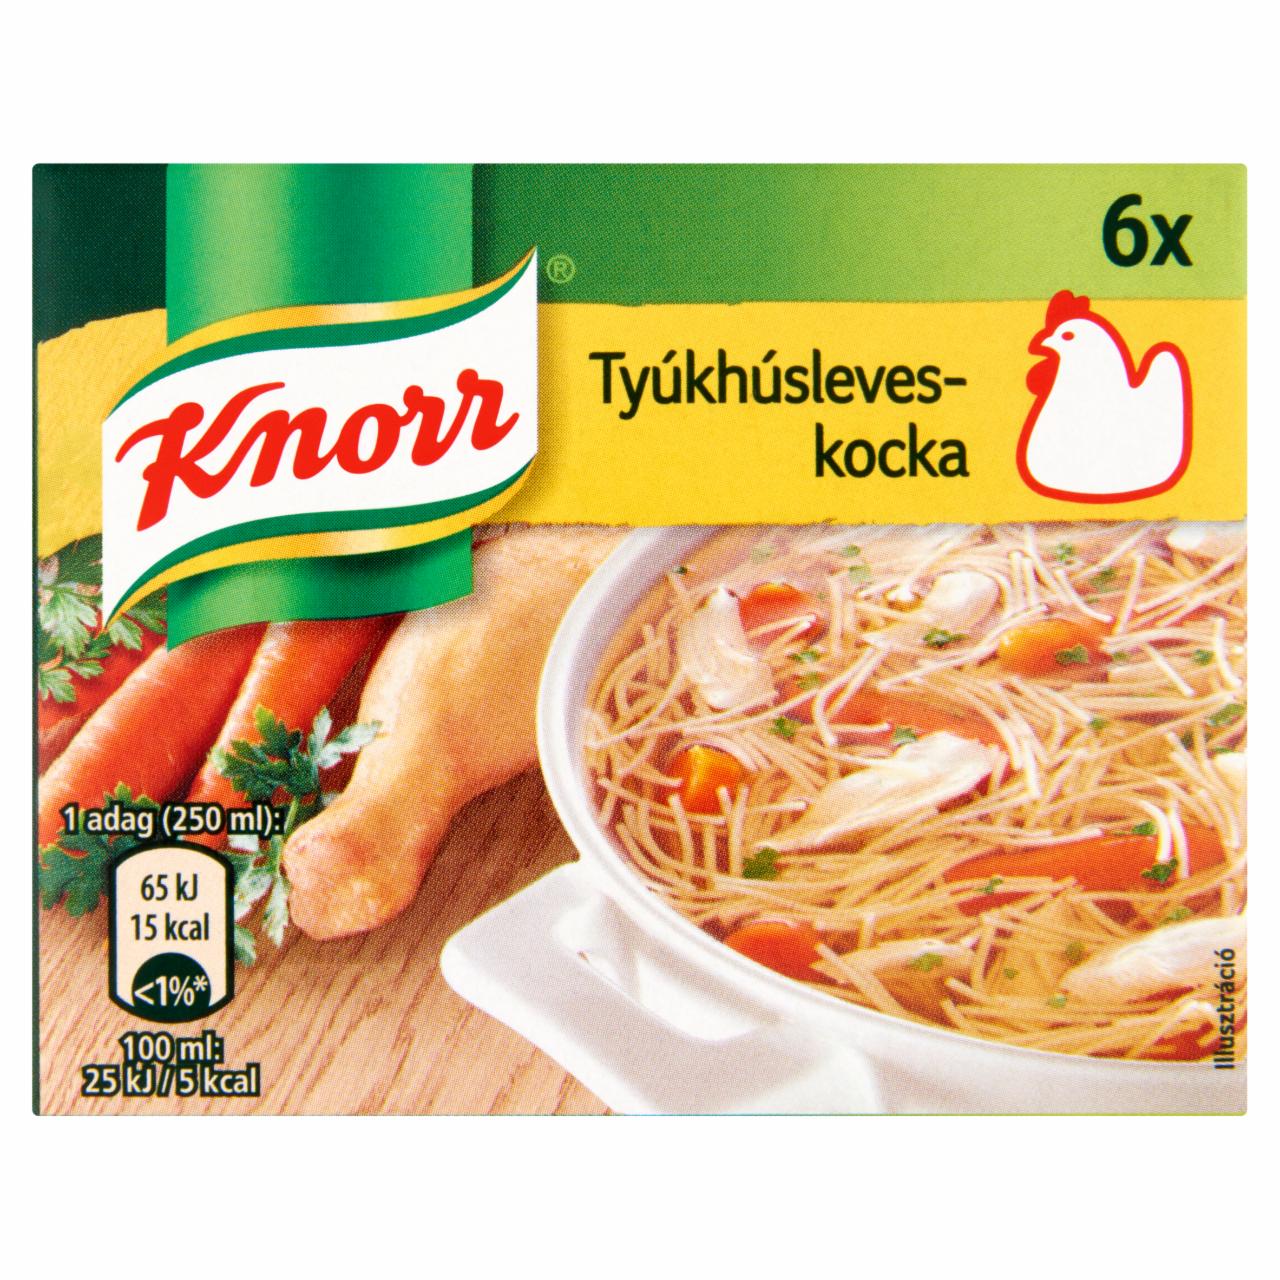 Képek - Knorr tyúkhúsleveskocka 6 db 60 g